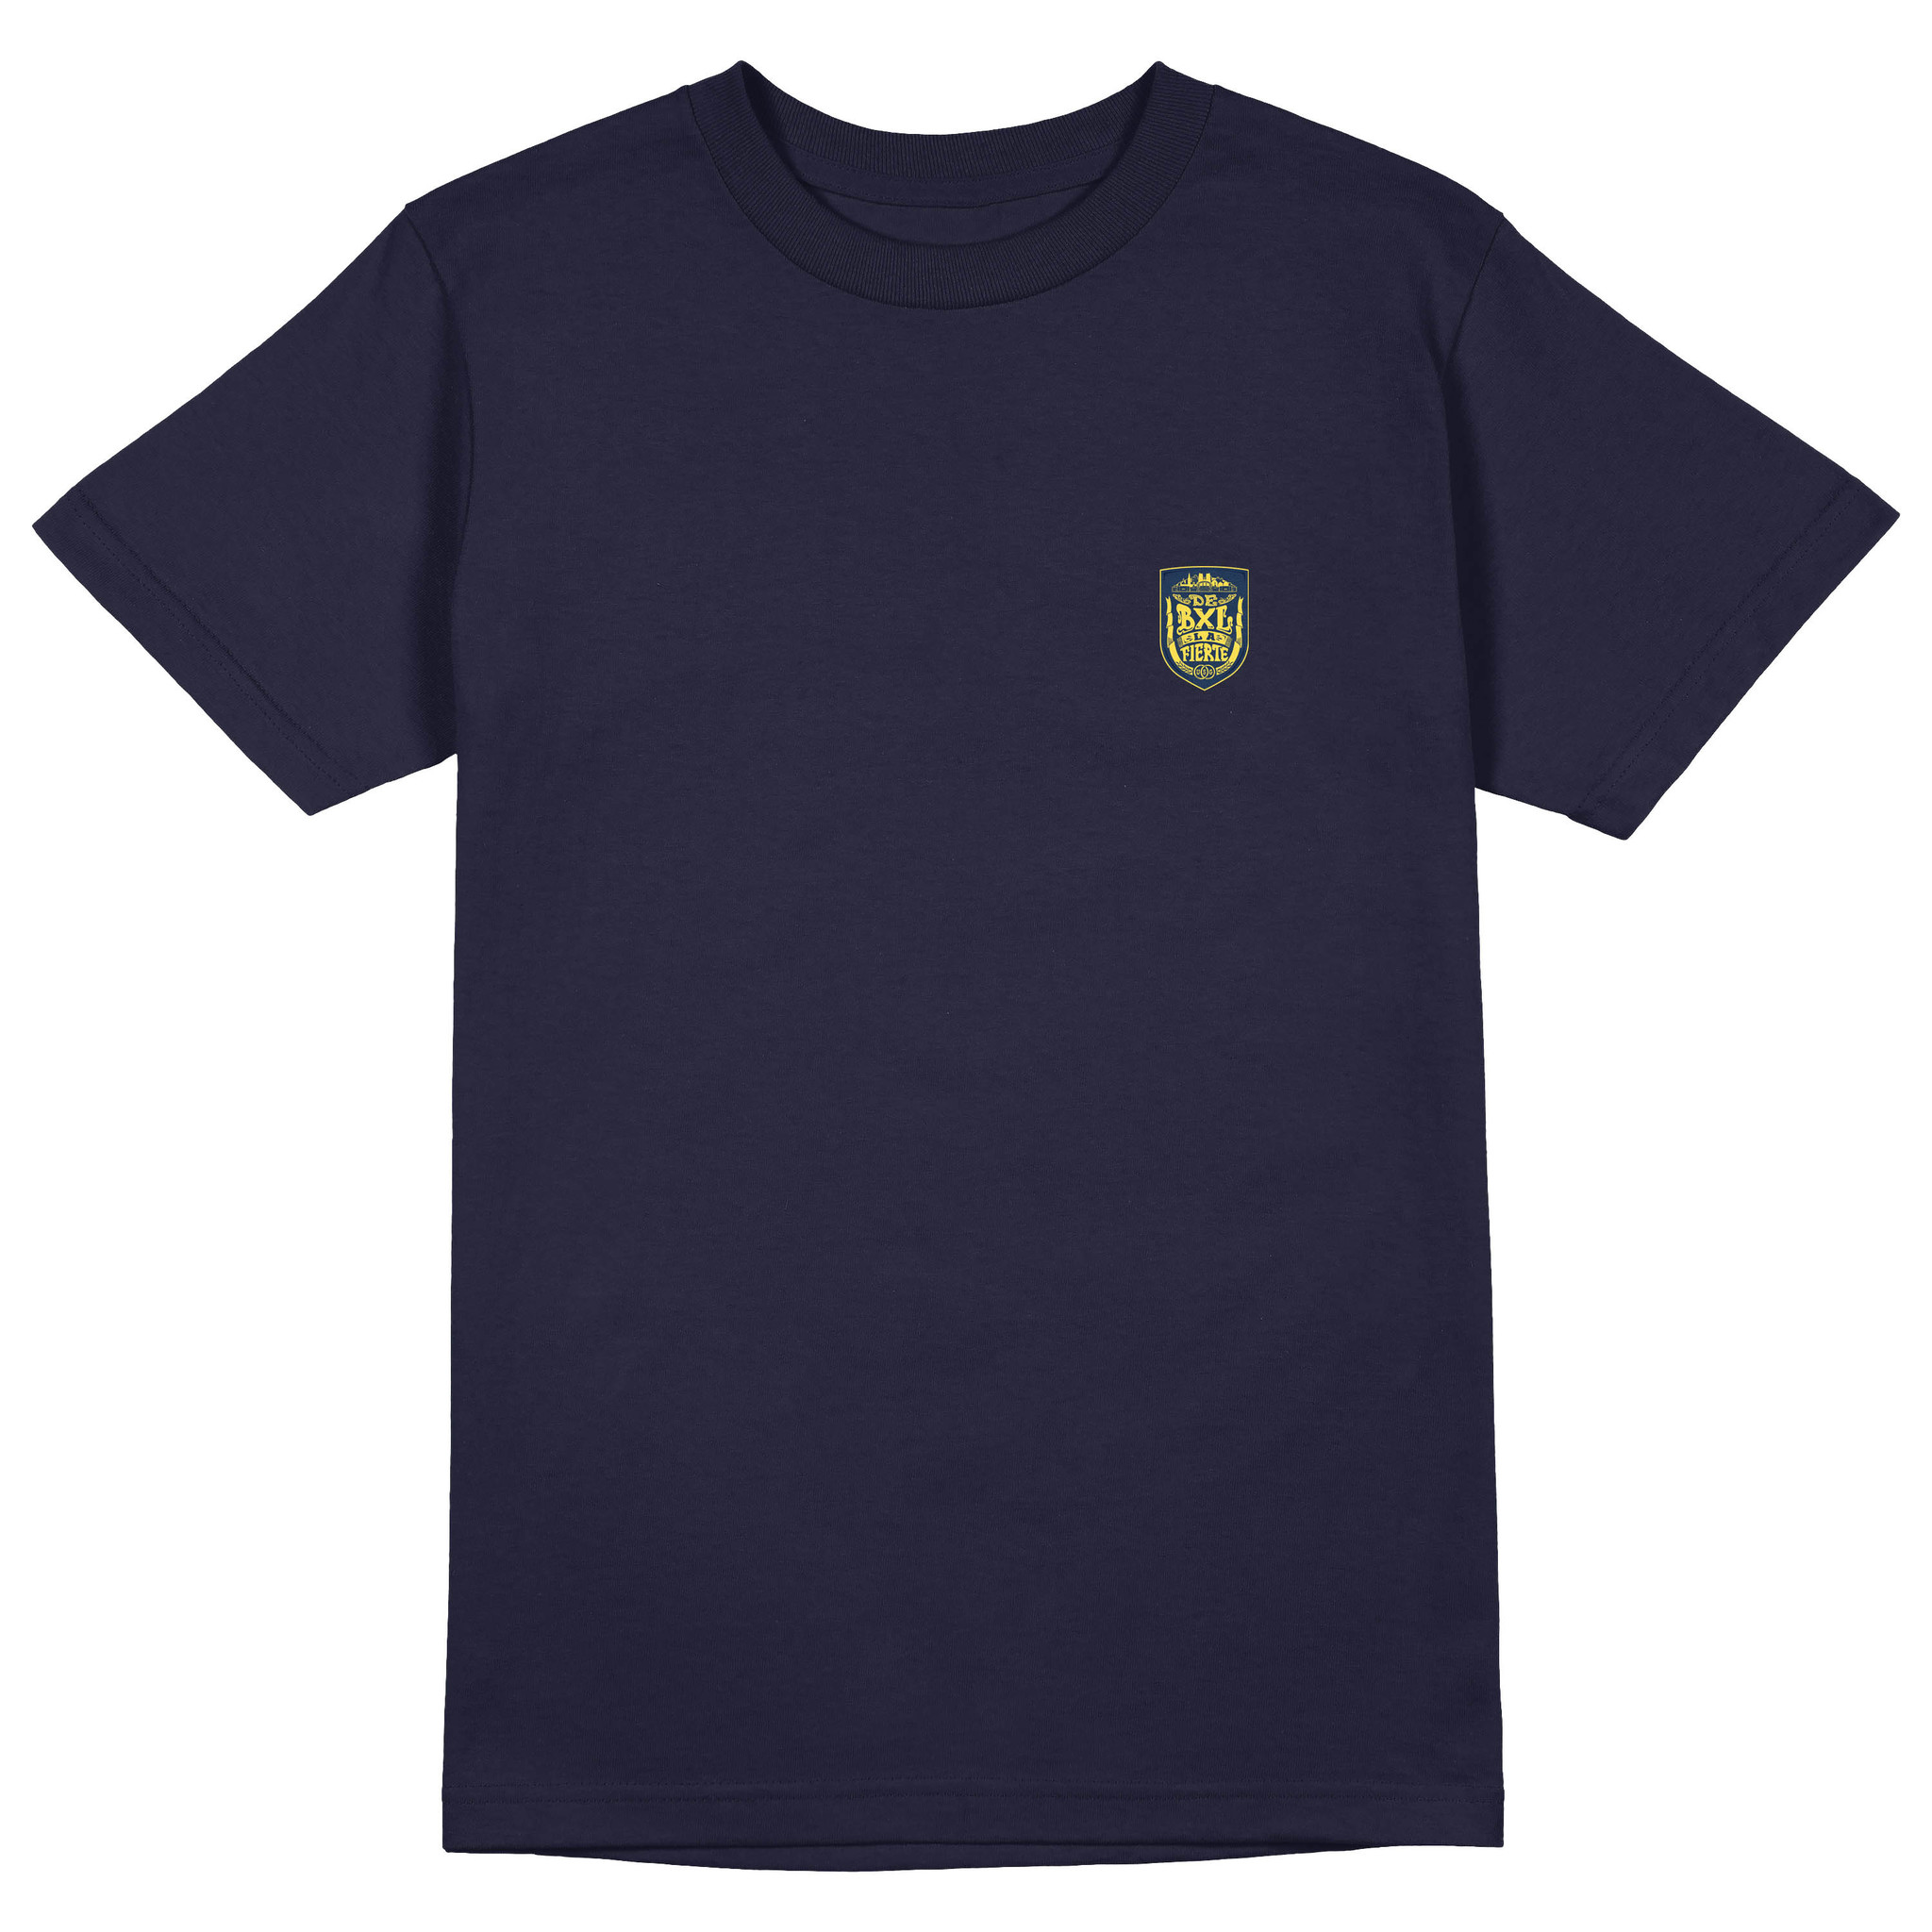 Topfanz Navy blue t-shirt BXL LA FIERTÉ